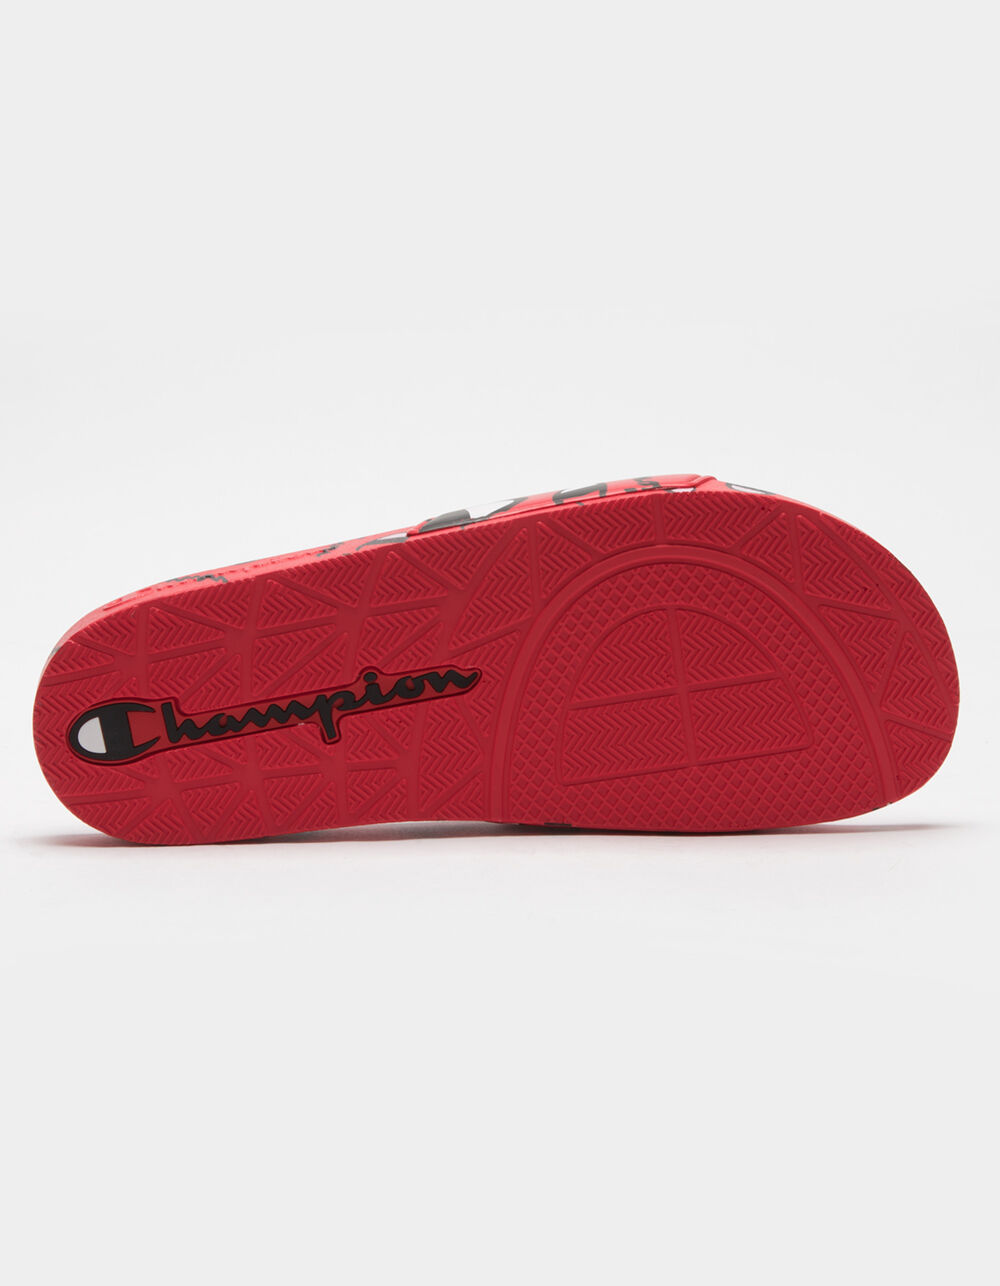 CHAMPION IPO Warped Mens Slide Sandals - RED | Tillys